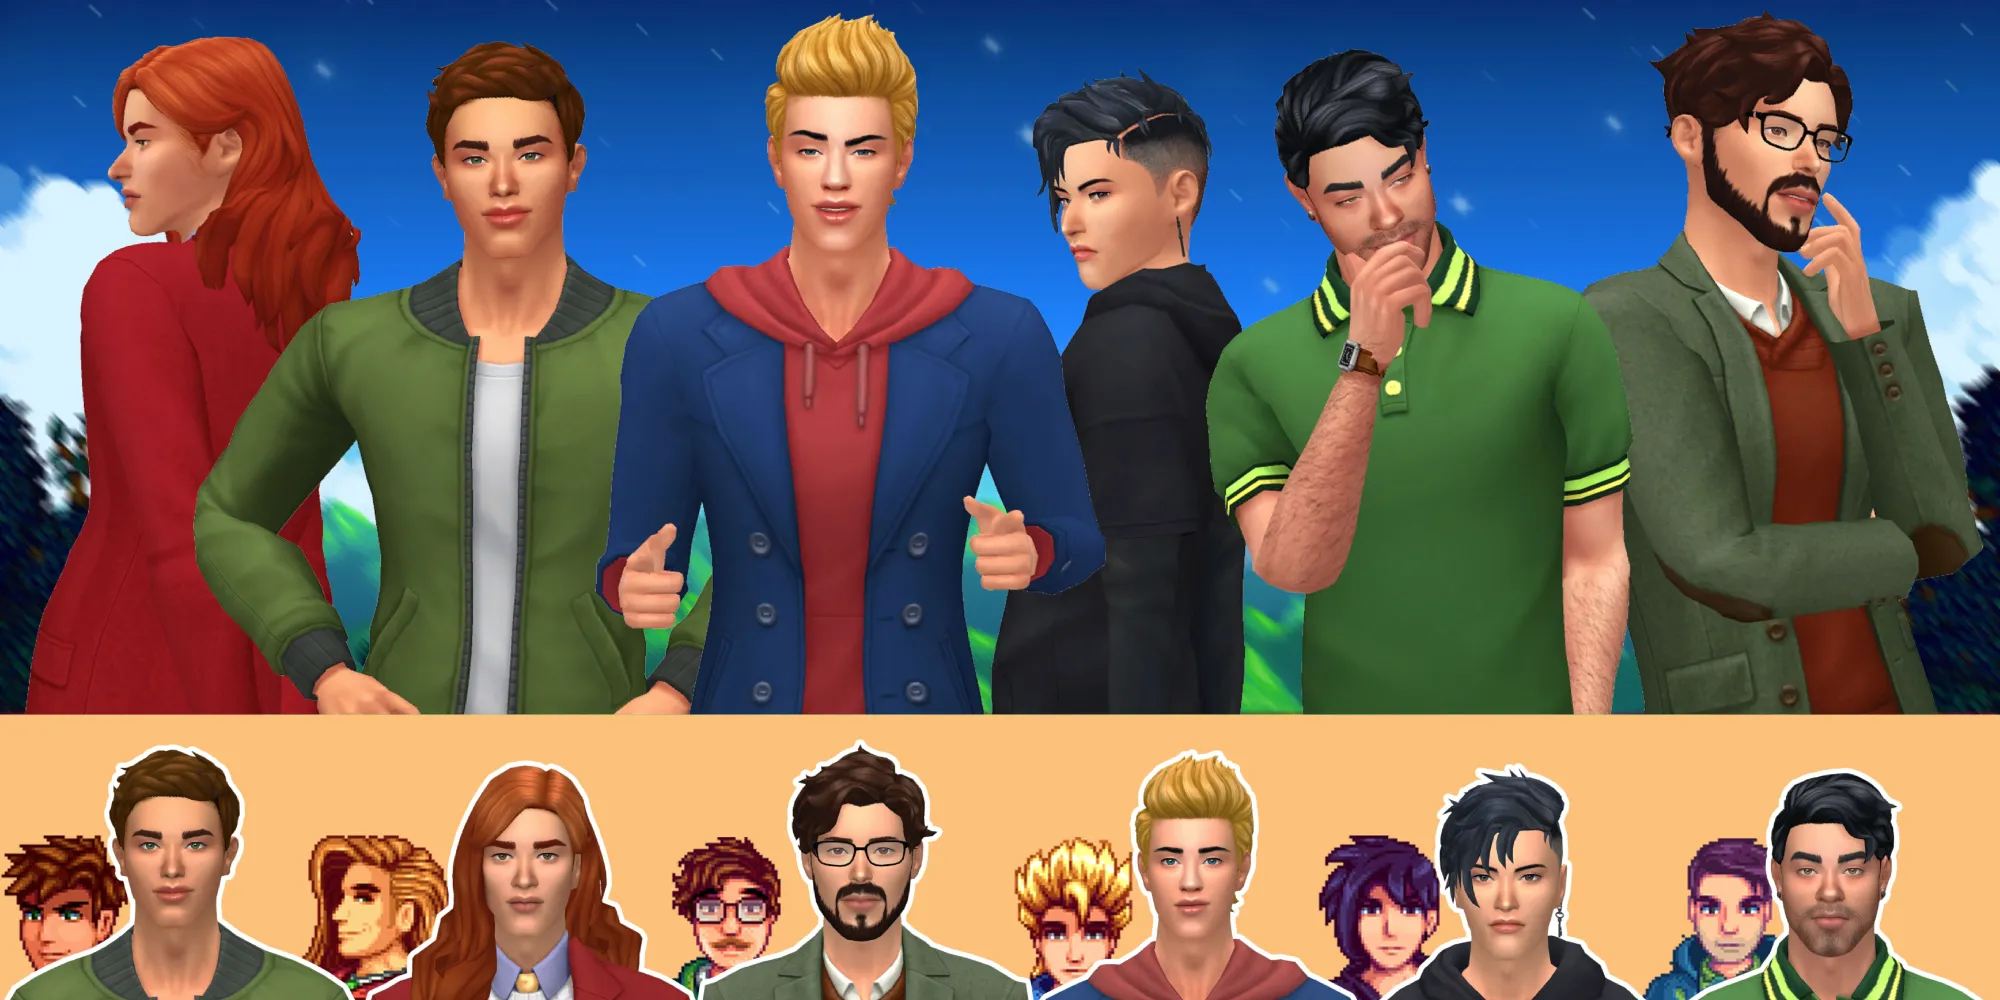 Холостяки из Stardew Valley превращены в персонажи The Sims 4